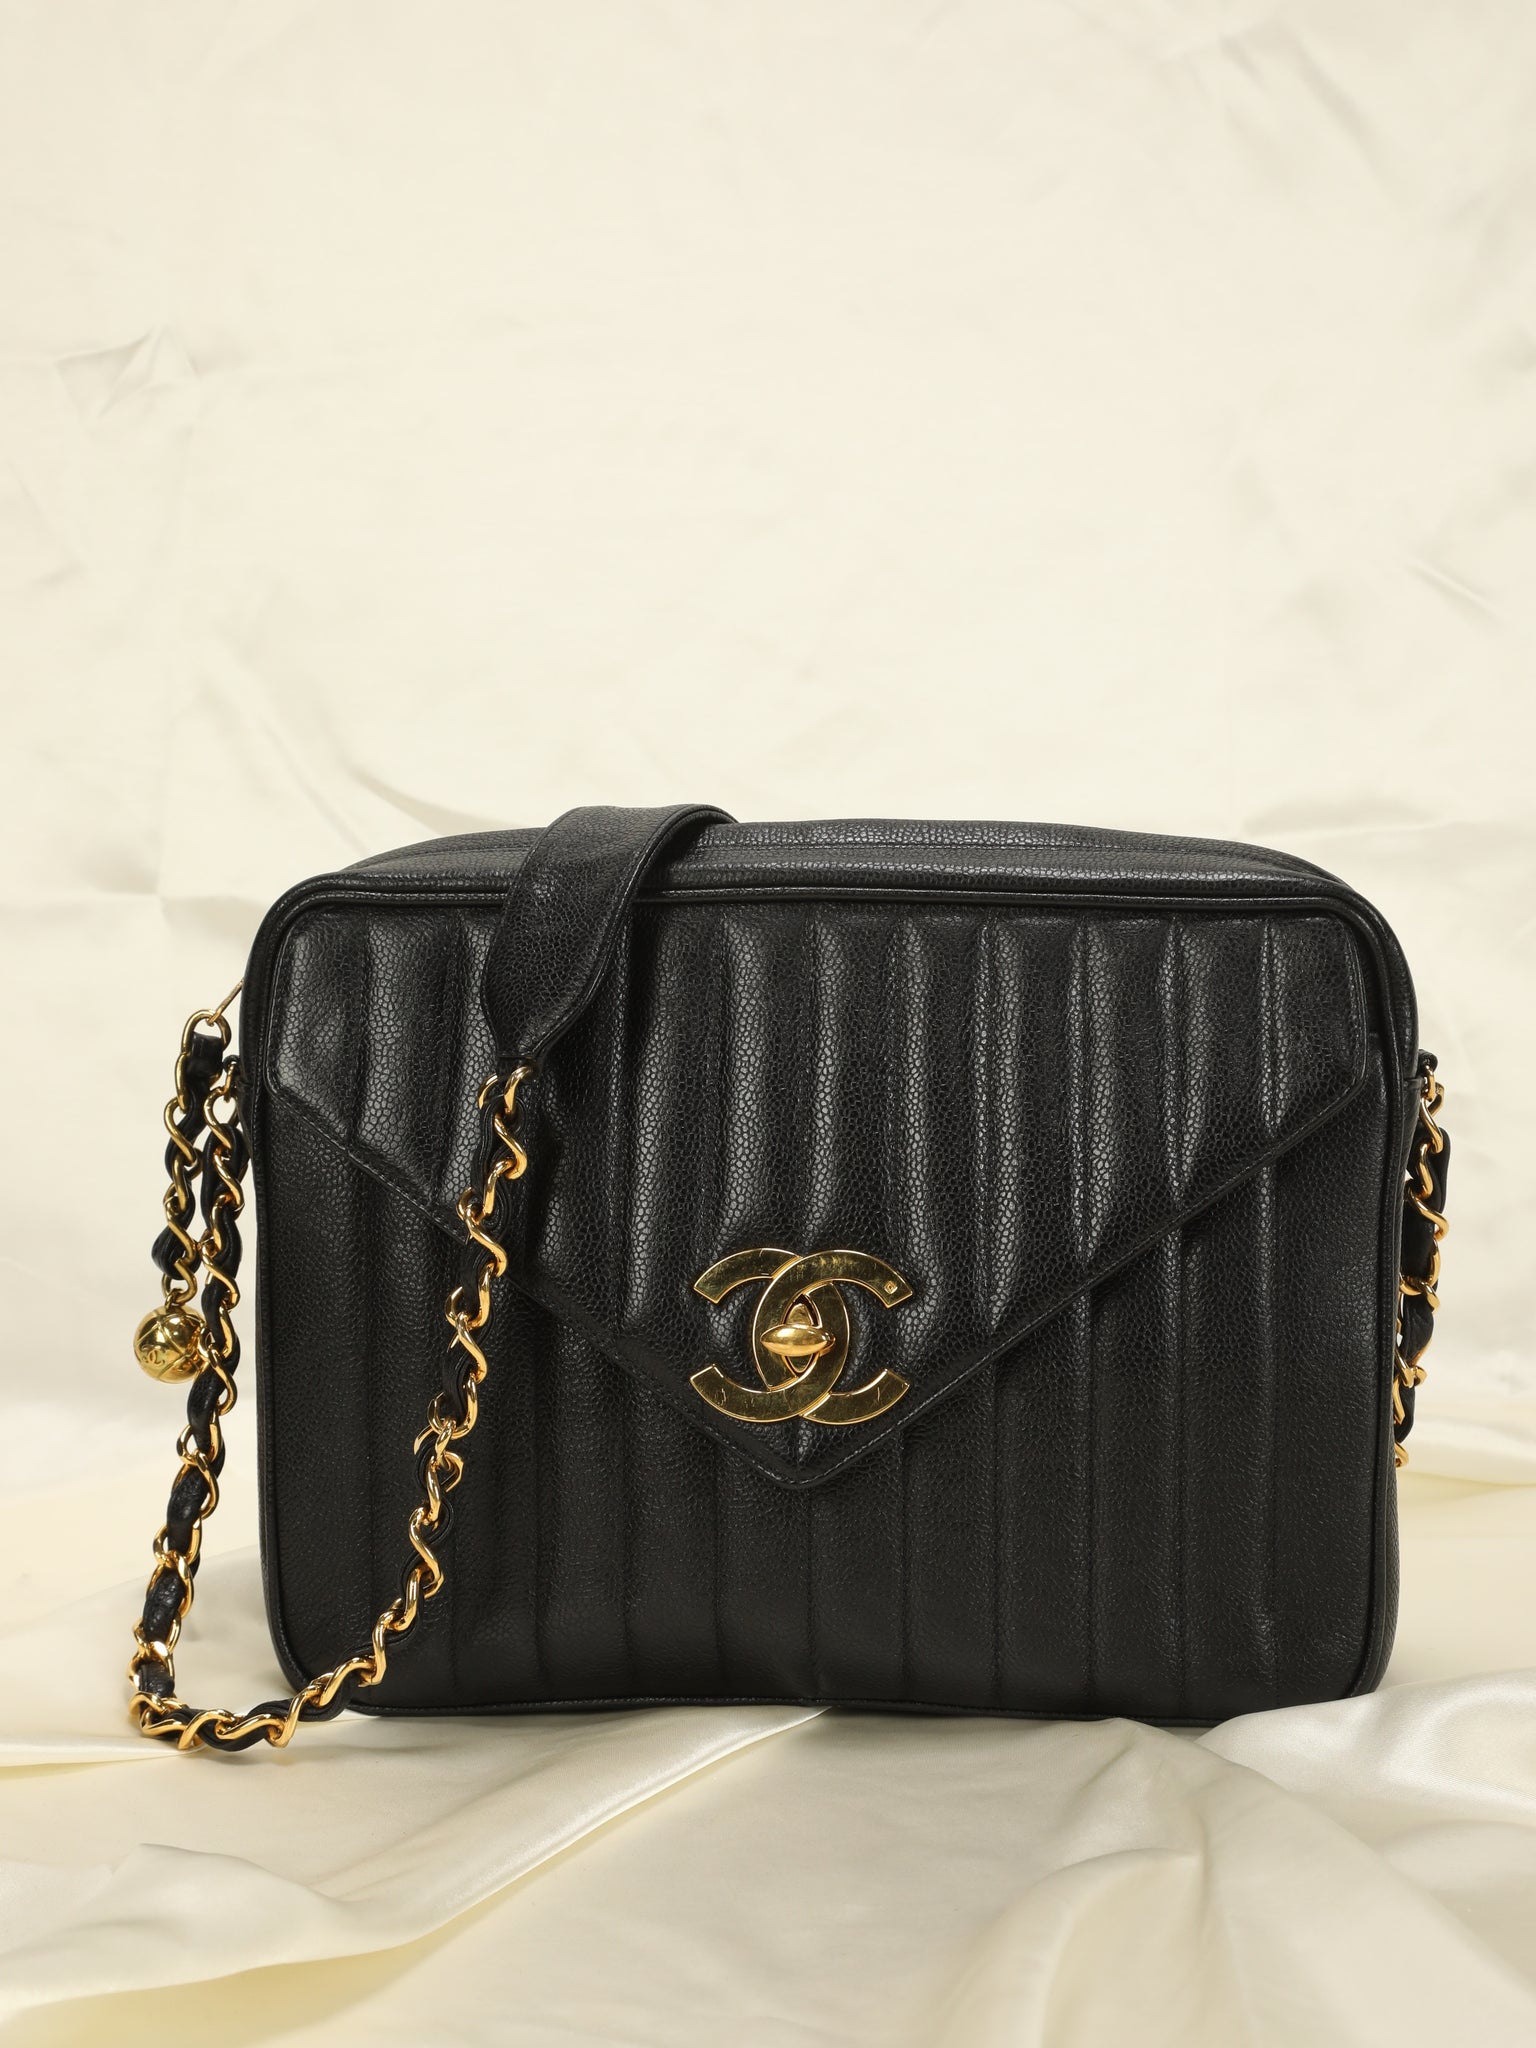 Chanel Jumbo Vertical Quilt Flap Bag - Good or Bag